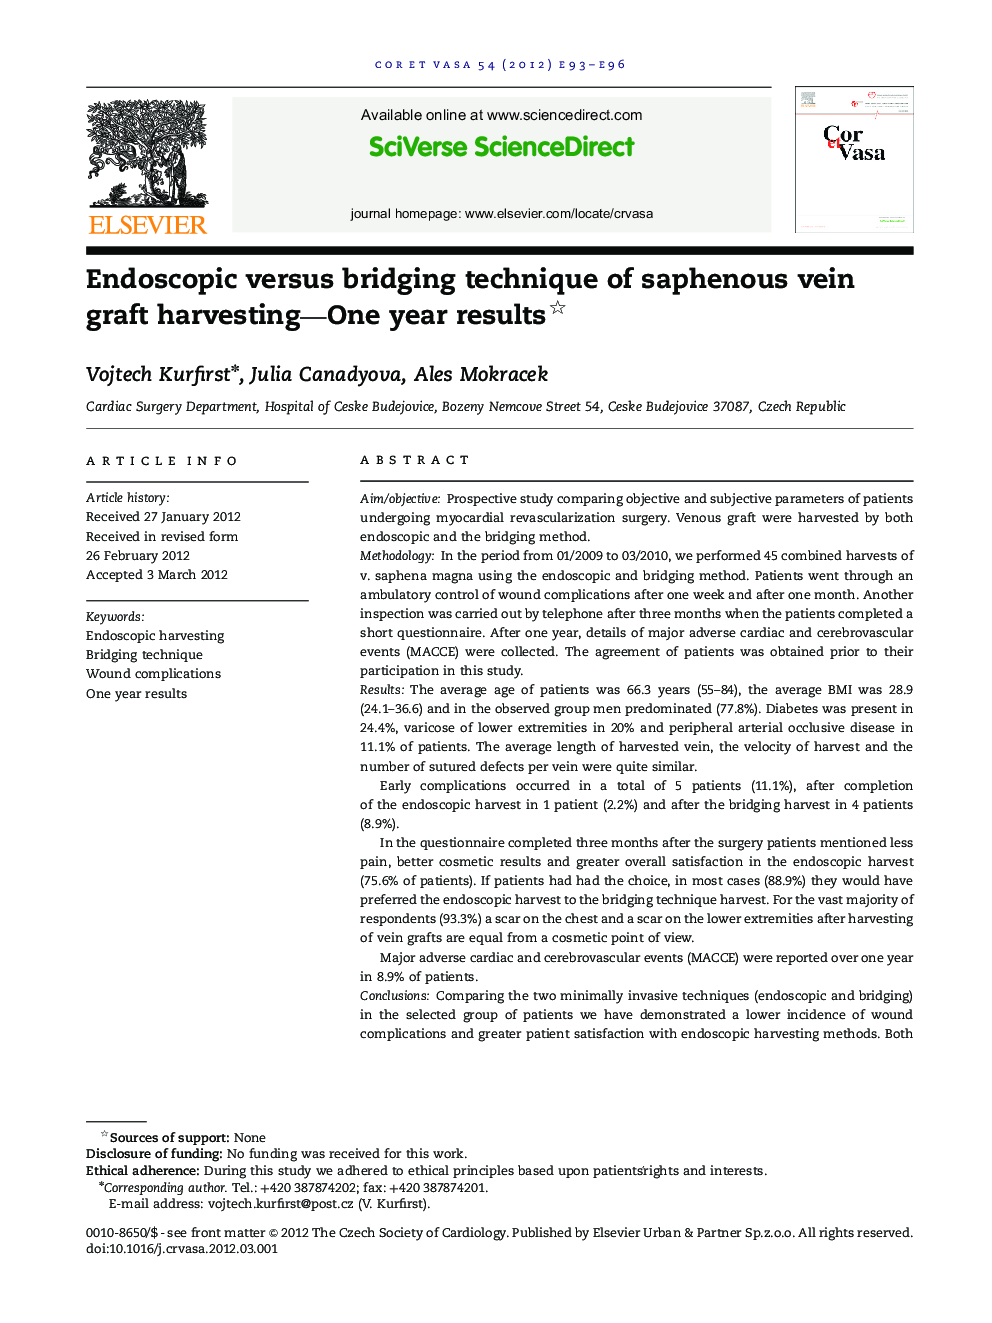 Endoscopic versus bridging technique of saphenous vein graft harvesting—One year results *